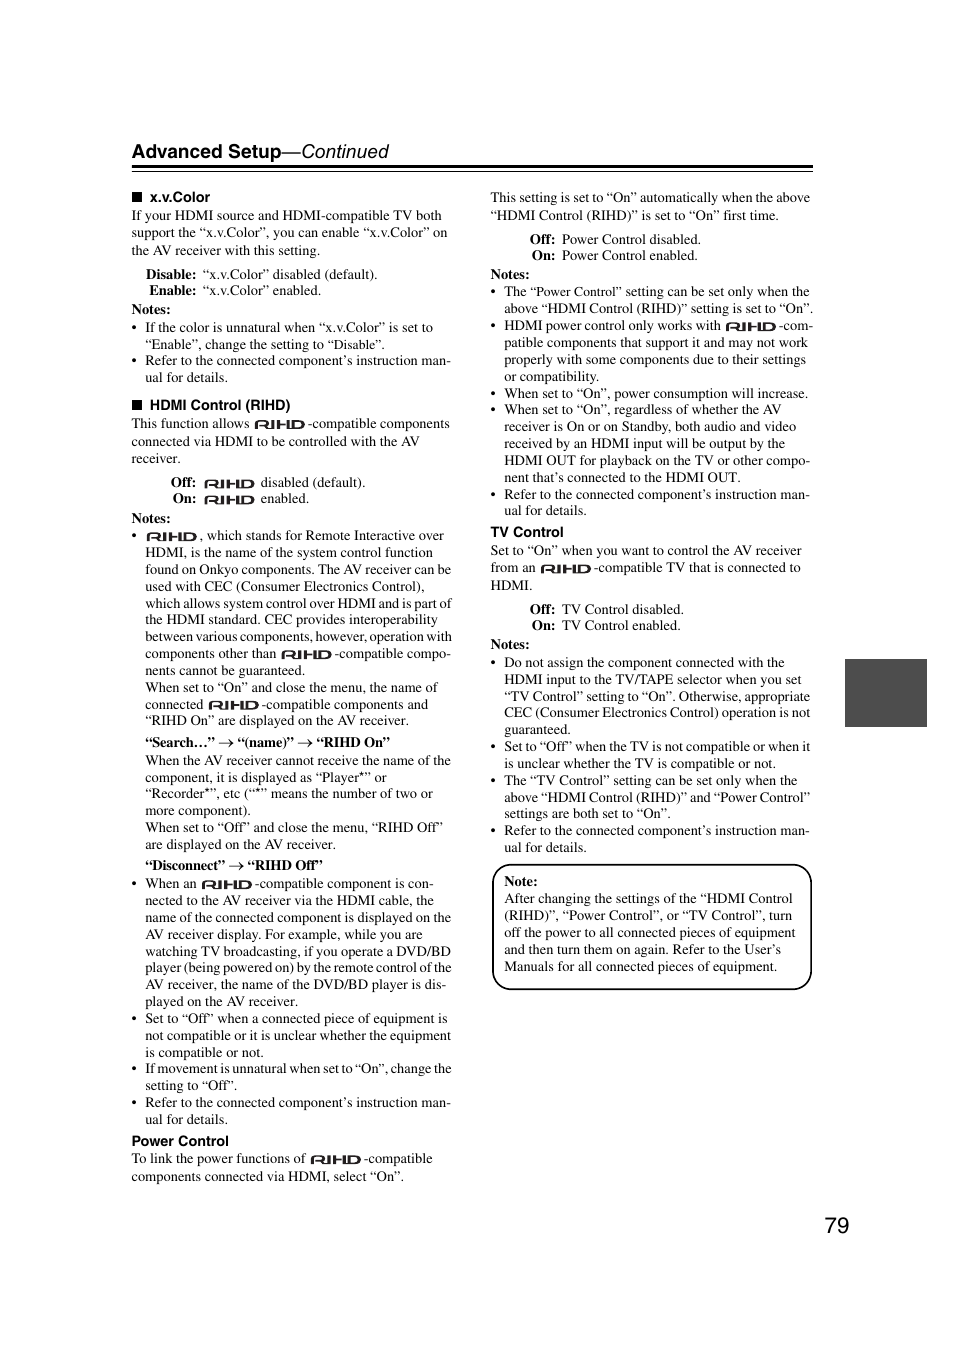 Hdmi control (rihd)” t, Advanced setup —continued | Onkyo HT-RC160 User Manual | Page 79 / 121